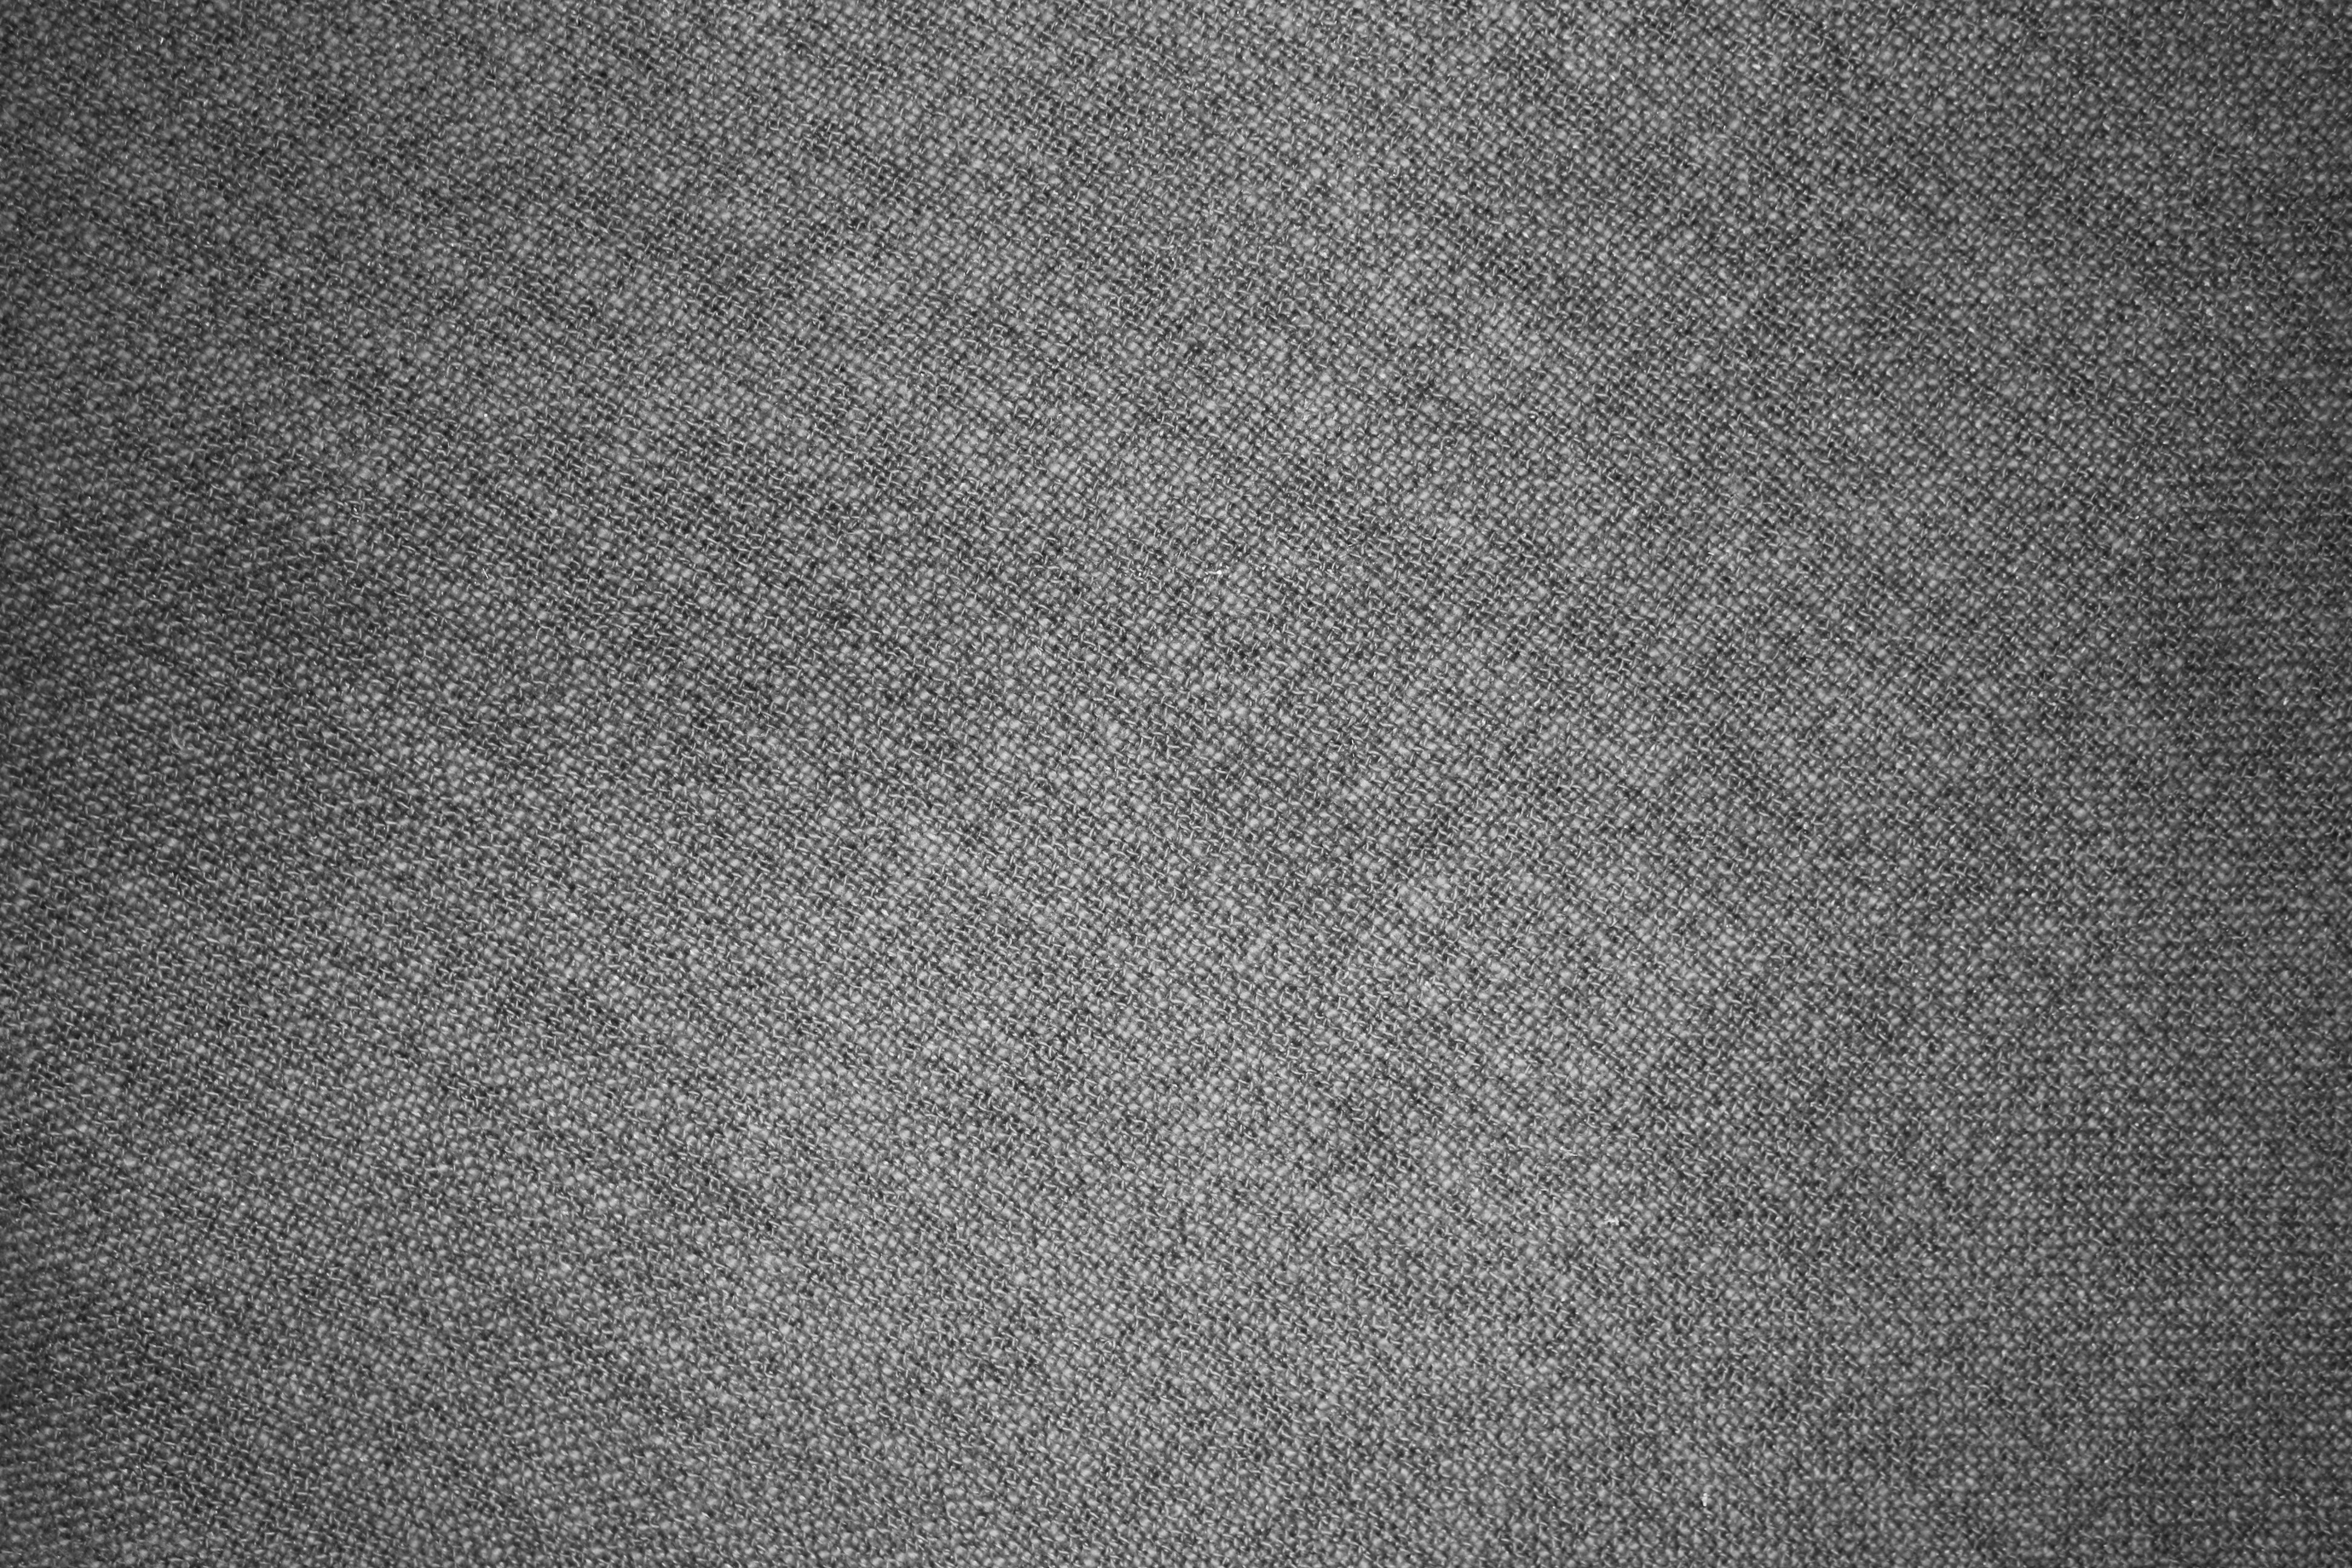 Gray Fabric Texture Picture | Free Photograph | Photos Public Domain